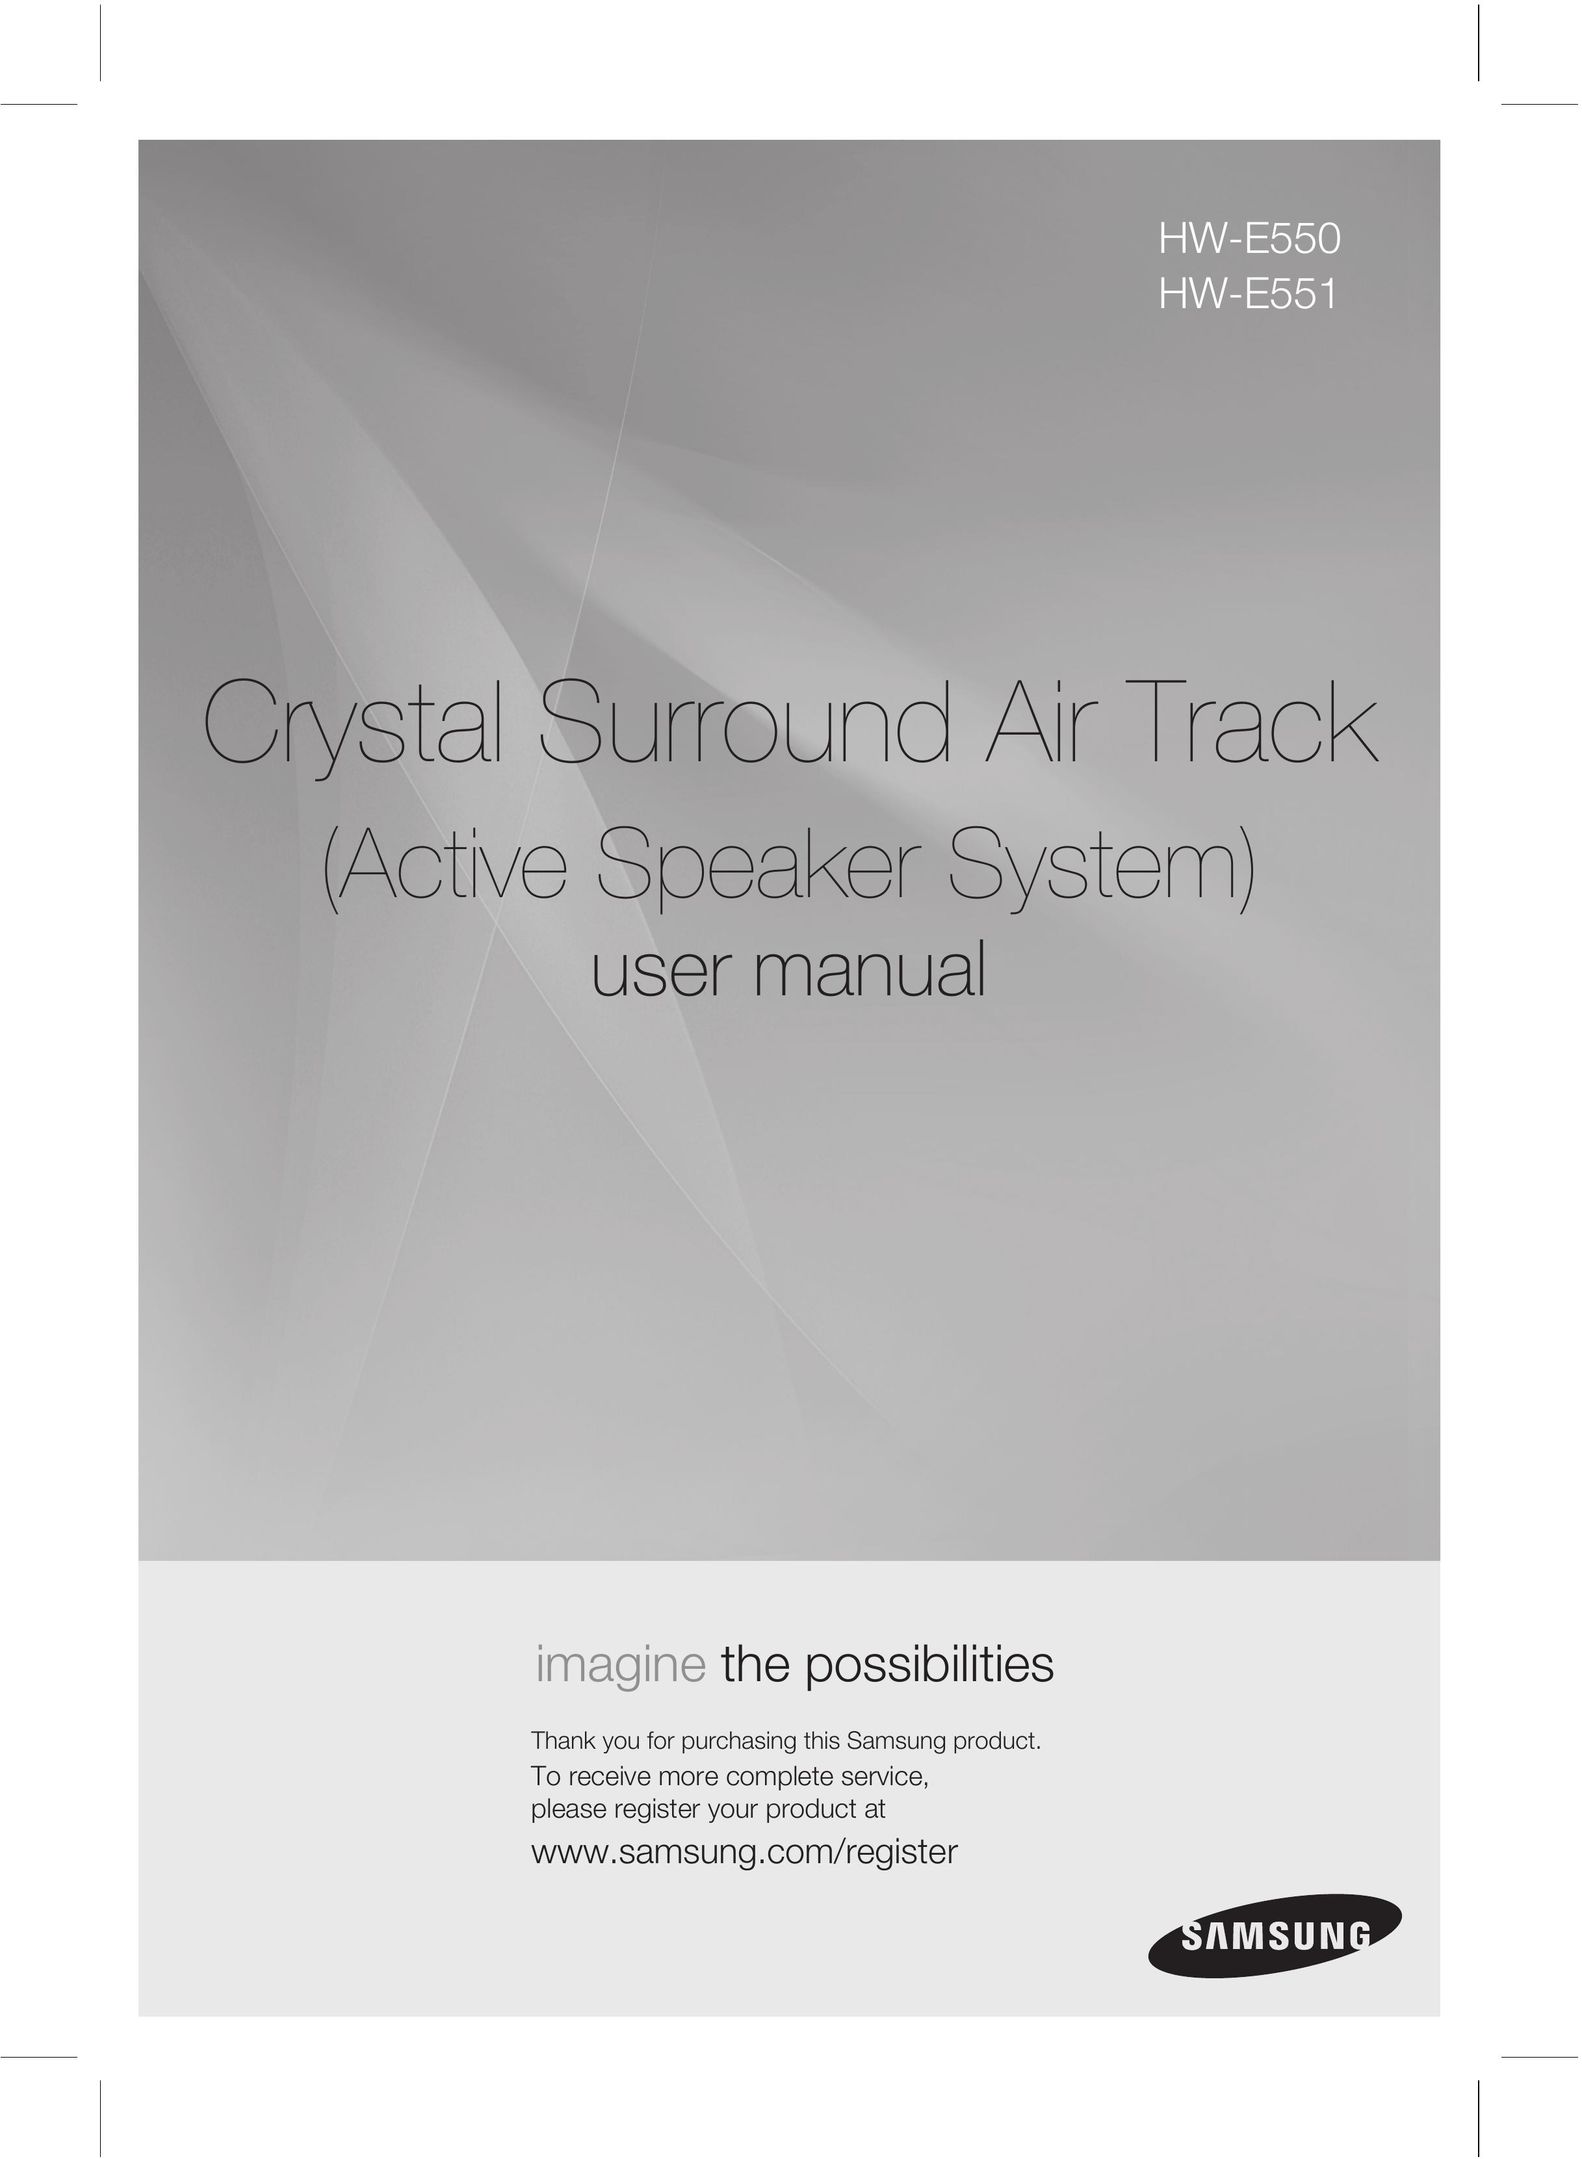 Samsung HWE550 Speaker System User Manual